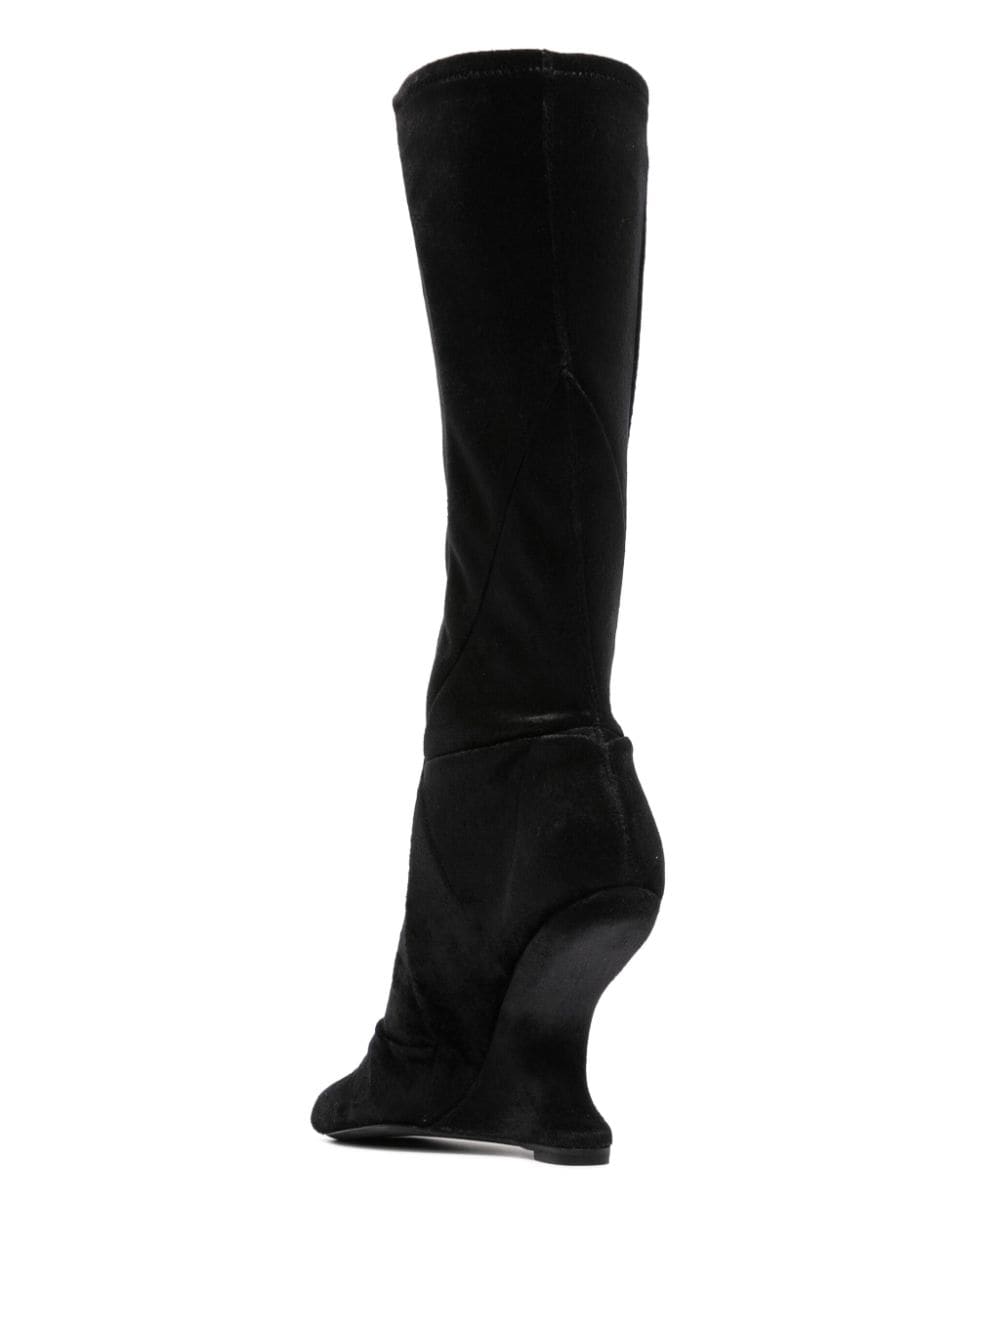 RICKOWENSLILIES Sleek Black Knee-High Heel Boots for Women